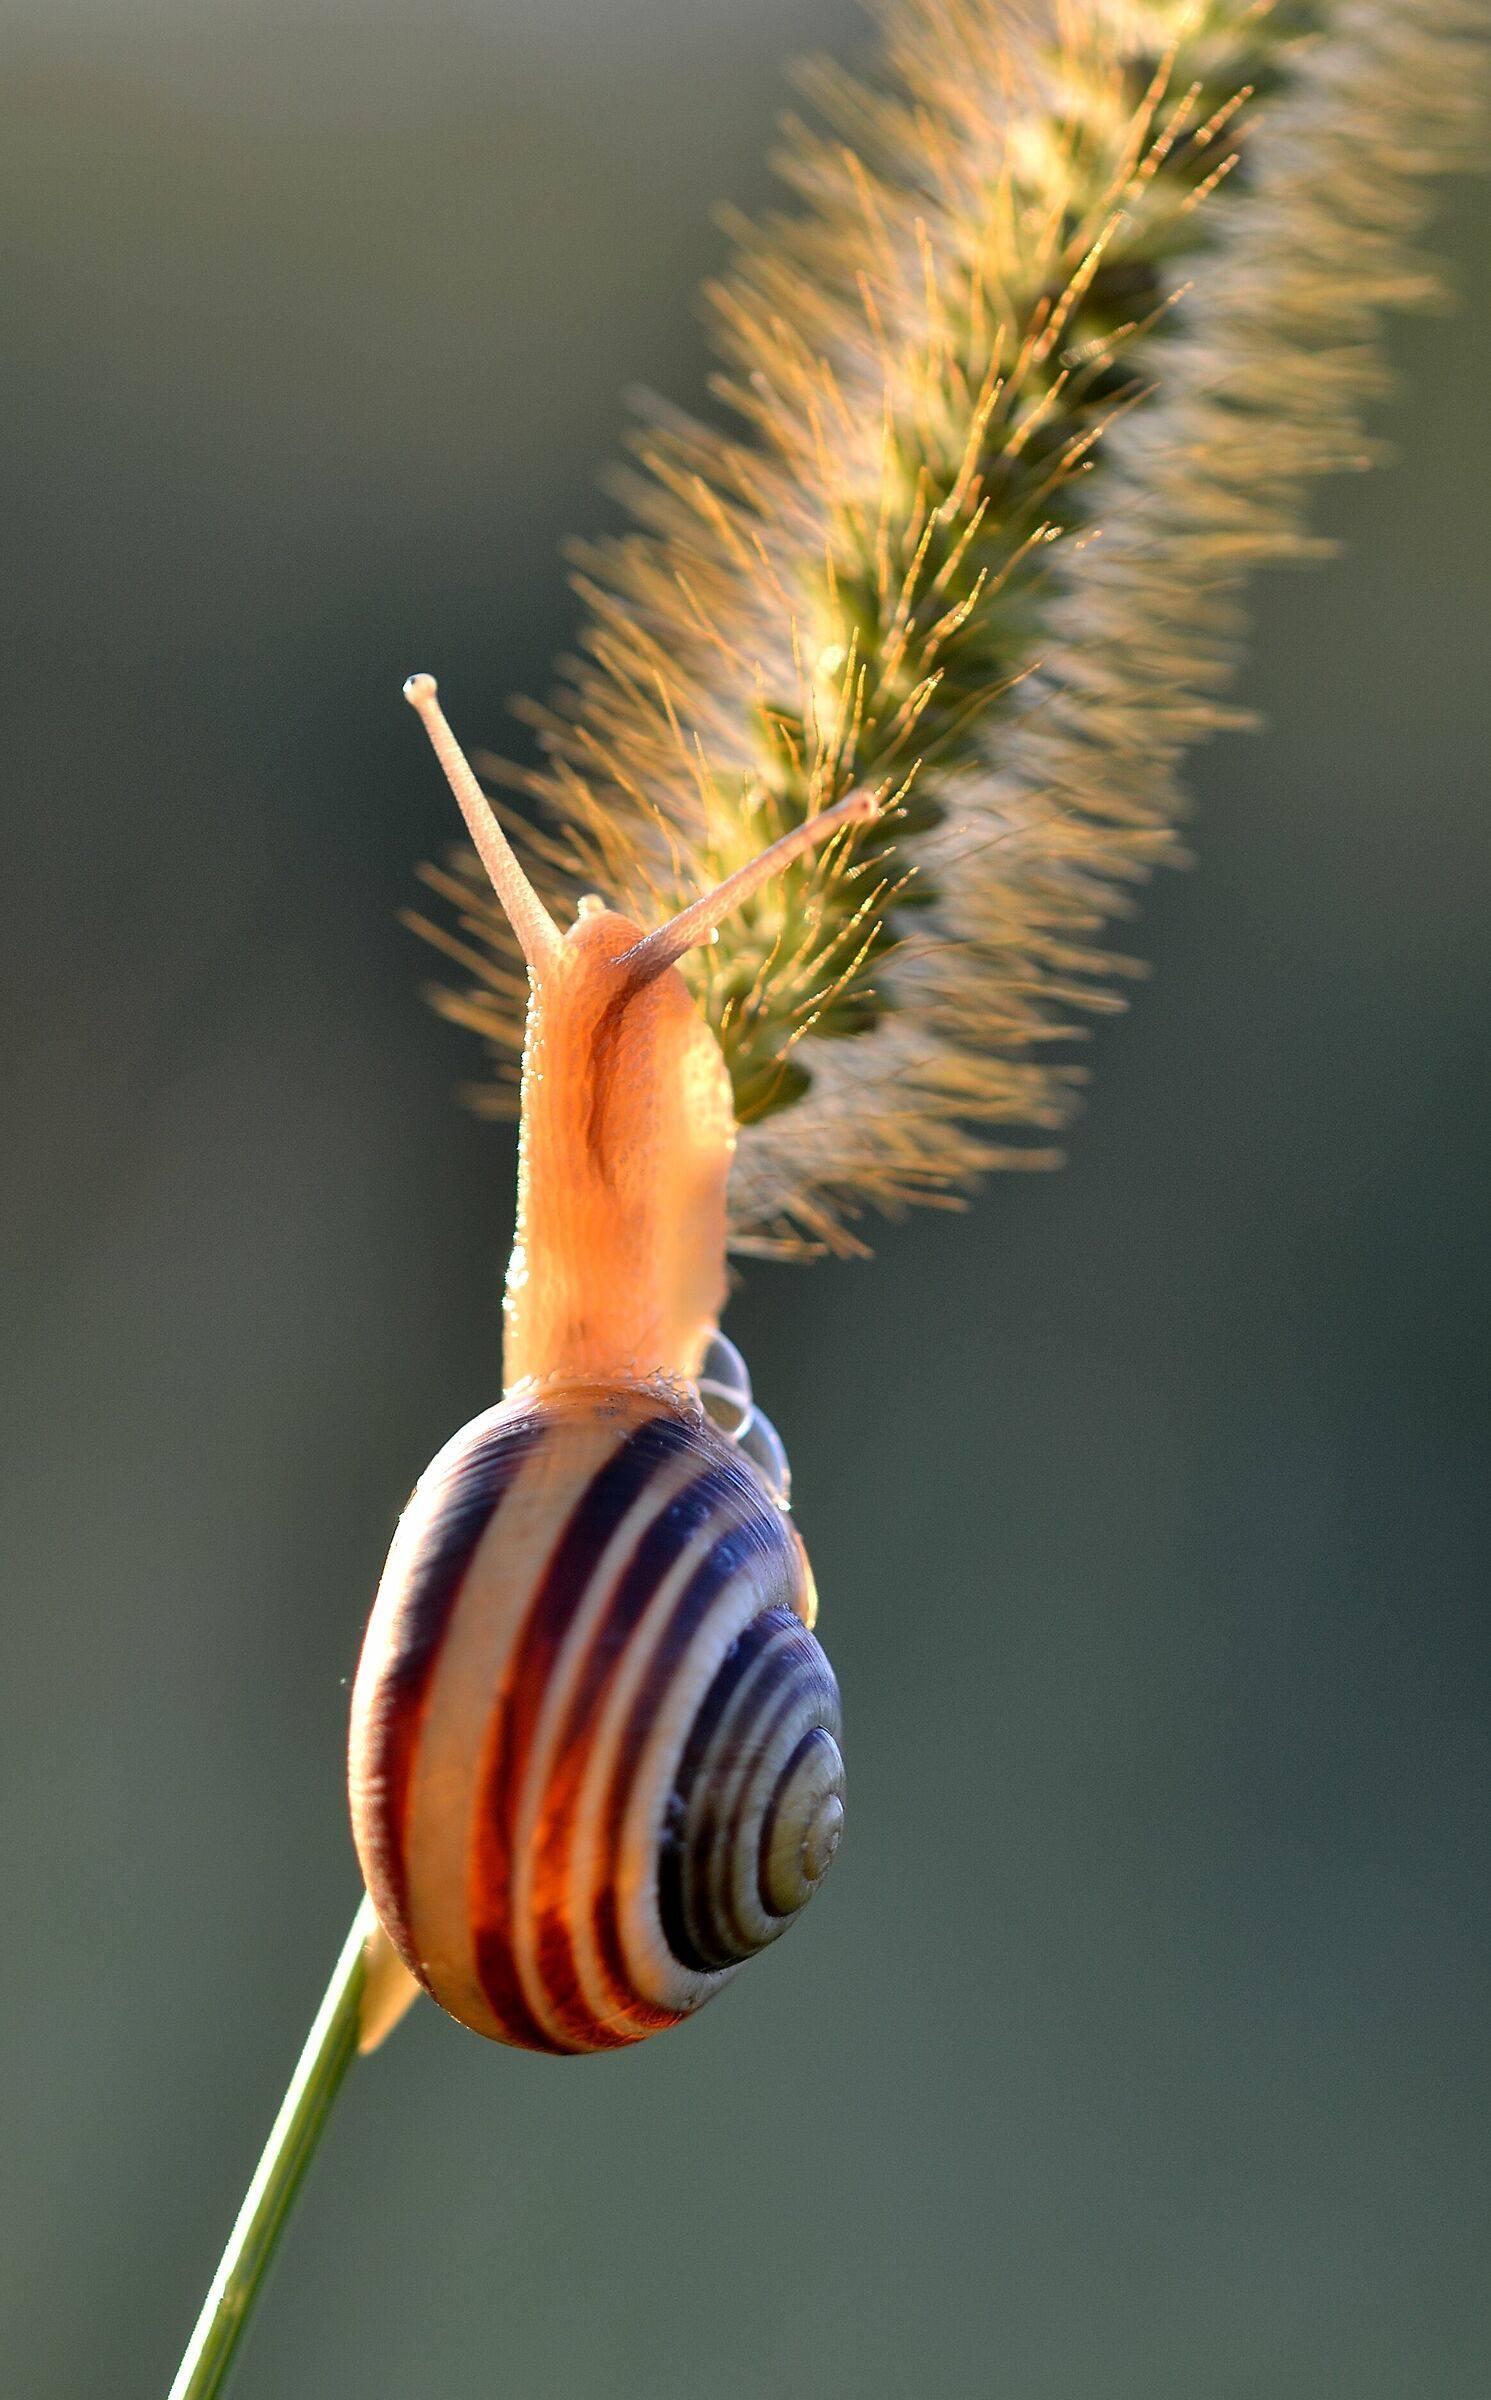 snail at sunset...